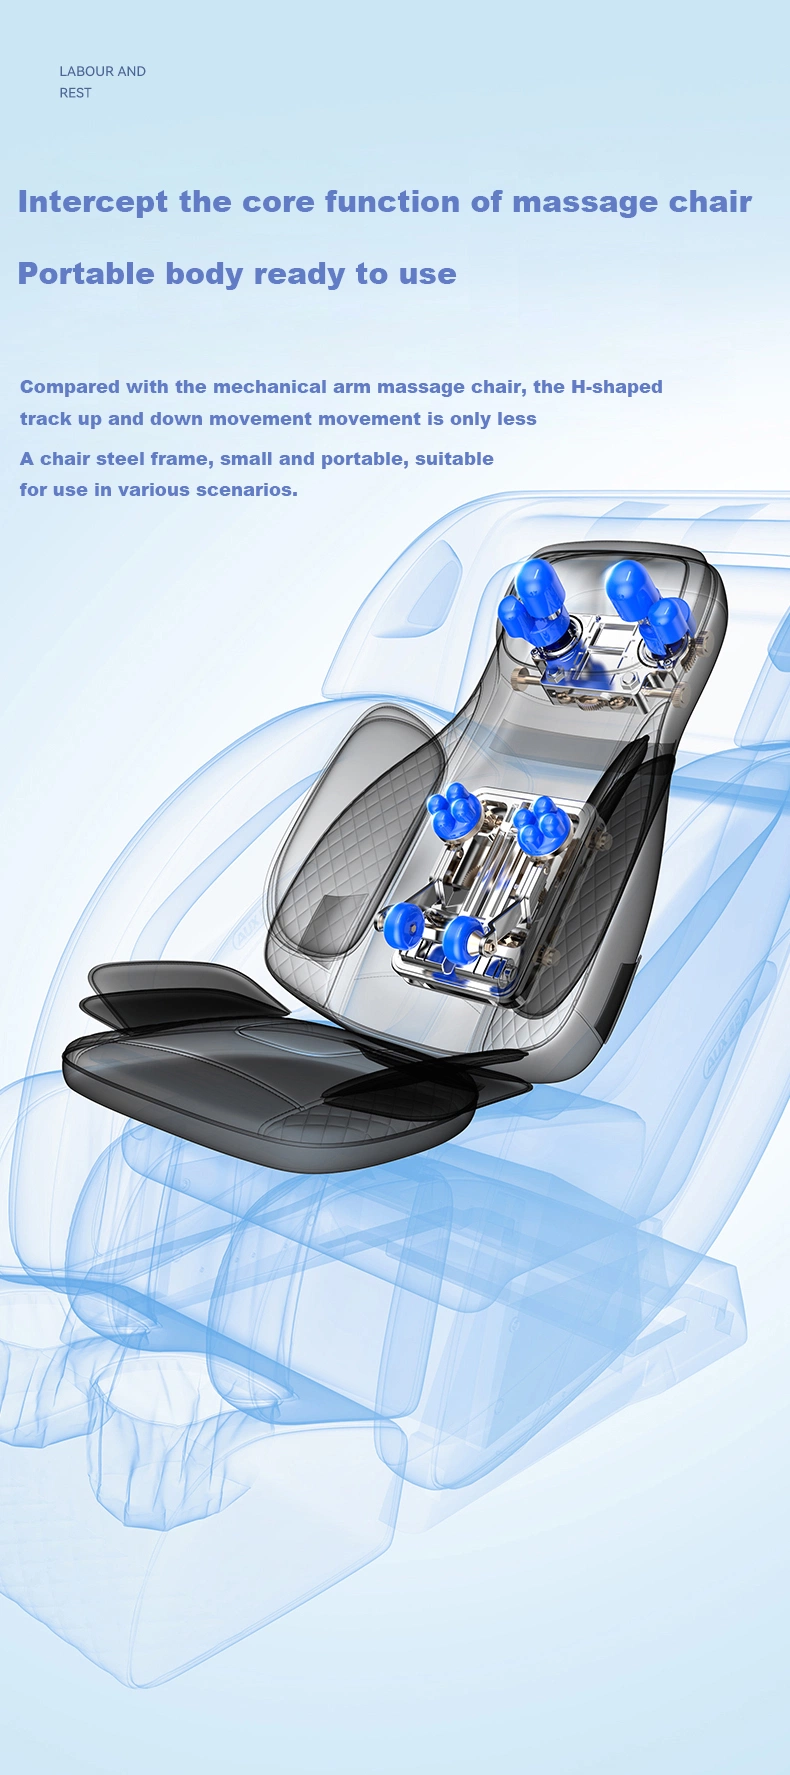 Ningdecrius 2022 Hot Sell Electric Full Back Massage Seat 3D Airbag Heated Car Vibrating Shiatsu Infrared Massage Cushion